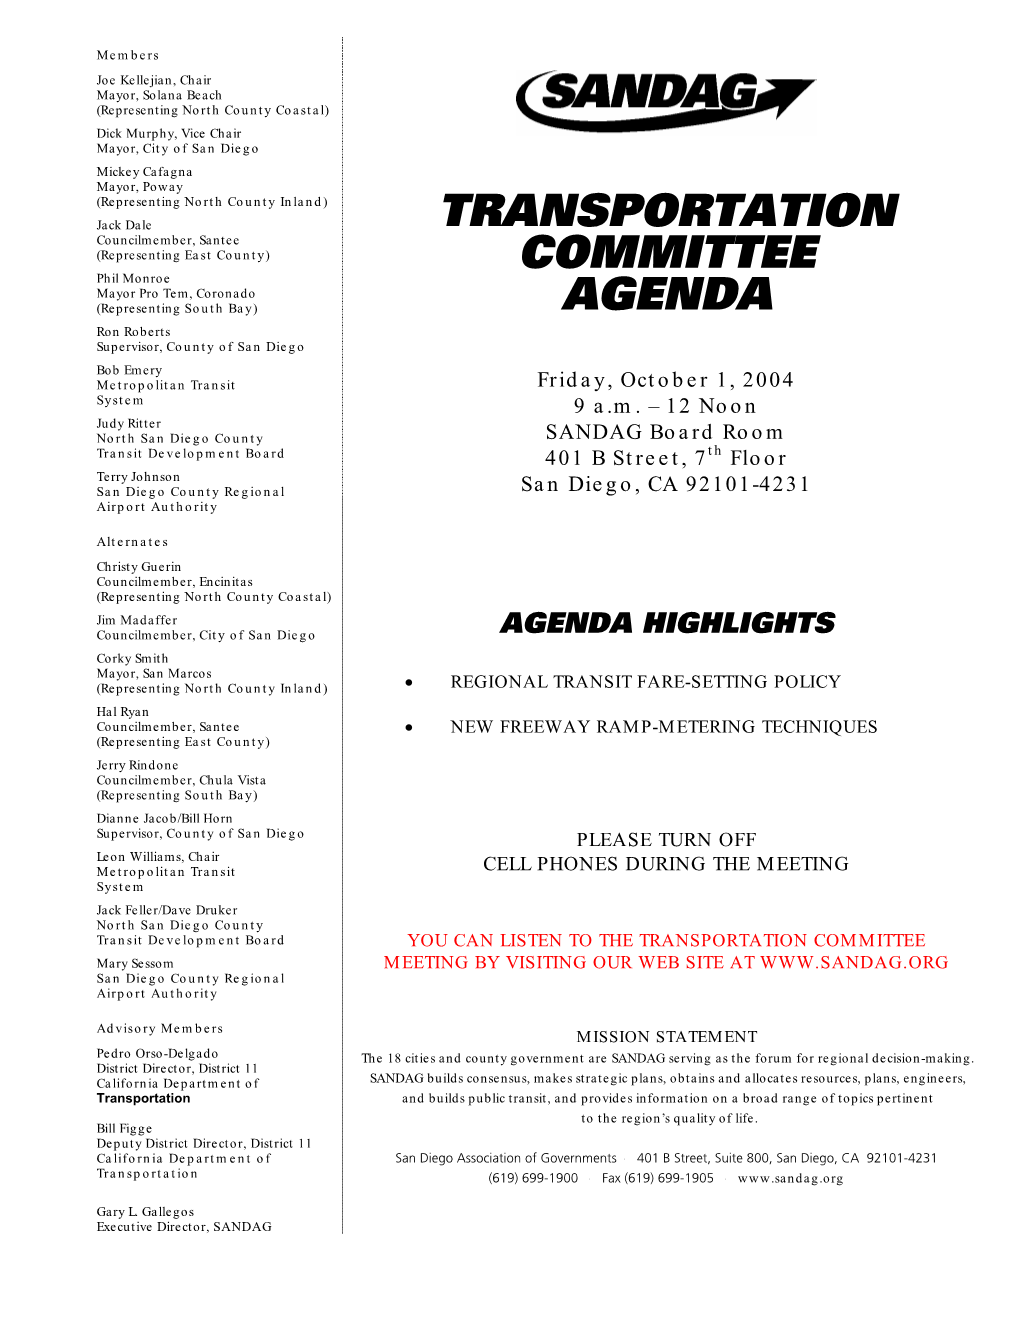 Agenda [PDF, 663